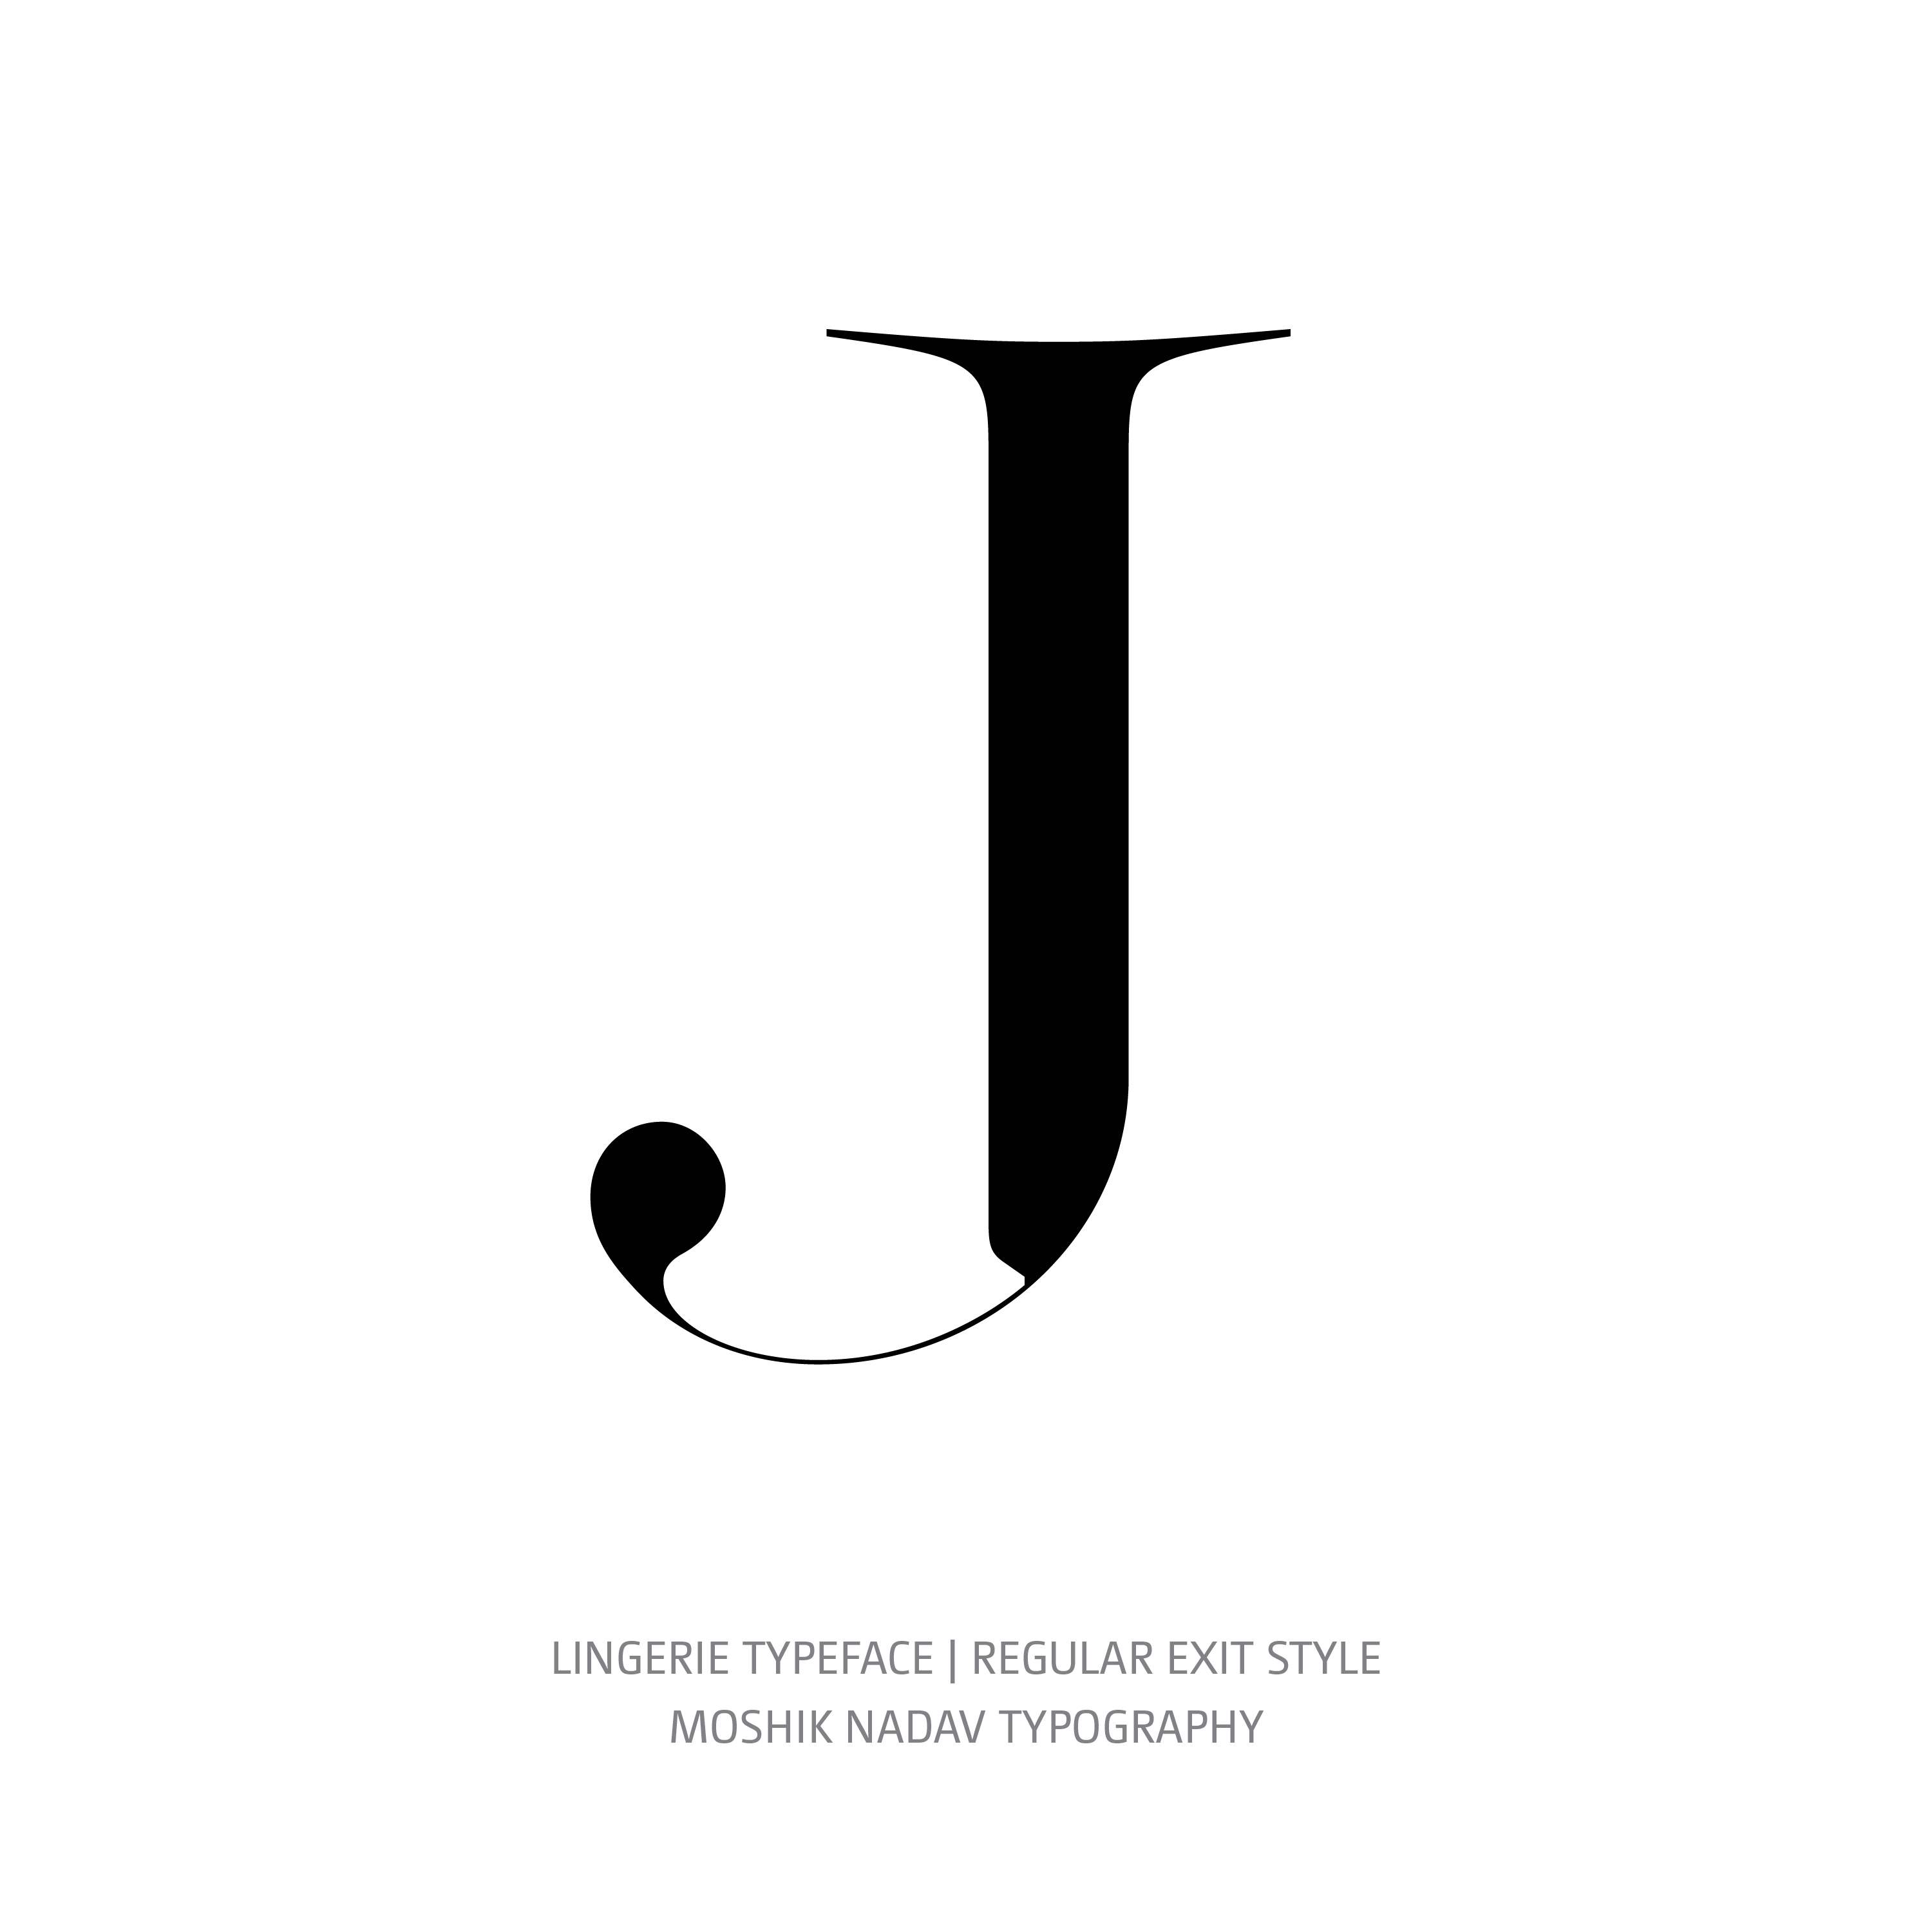 Lingerie Typeface Regular Exit J